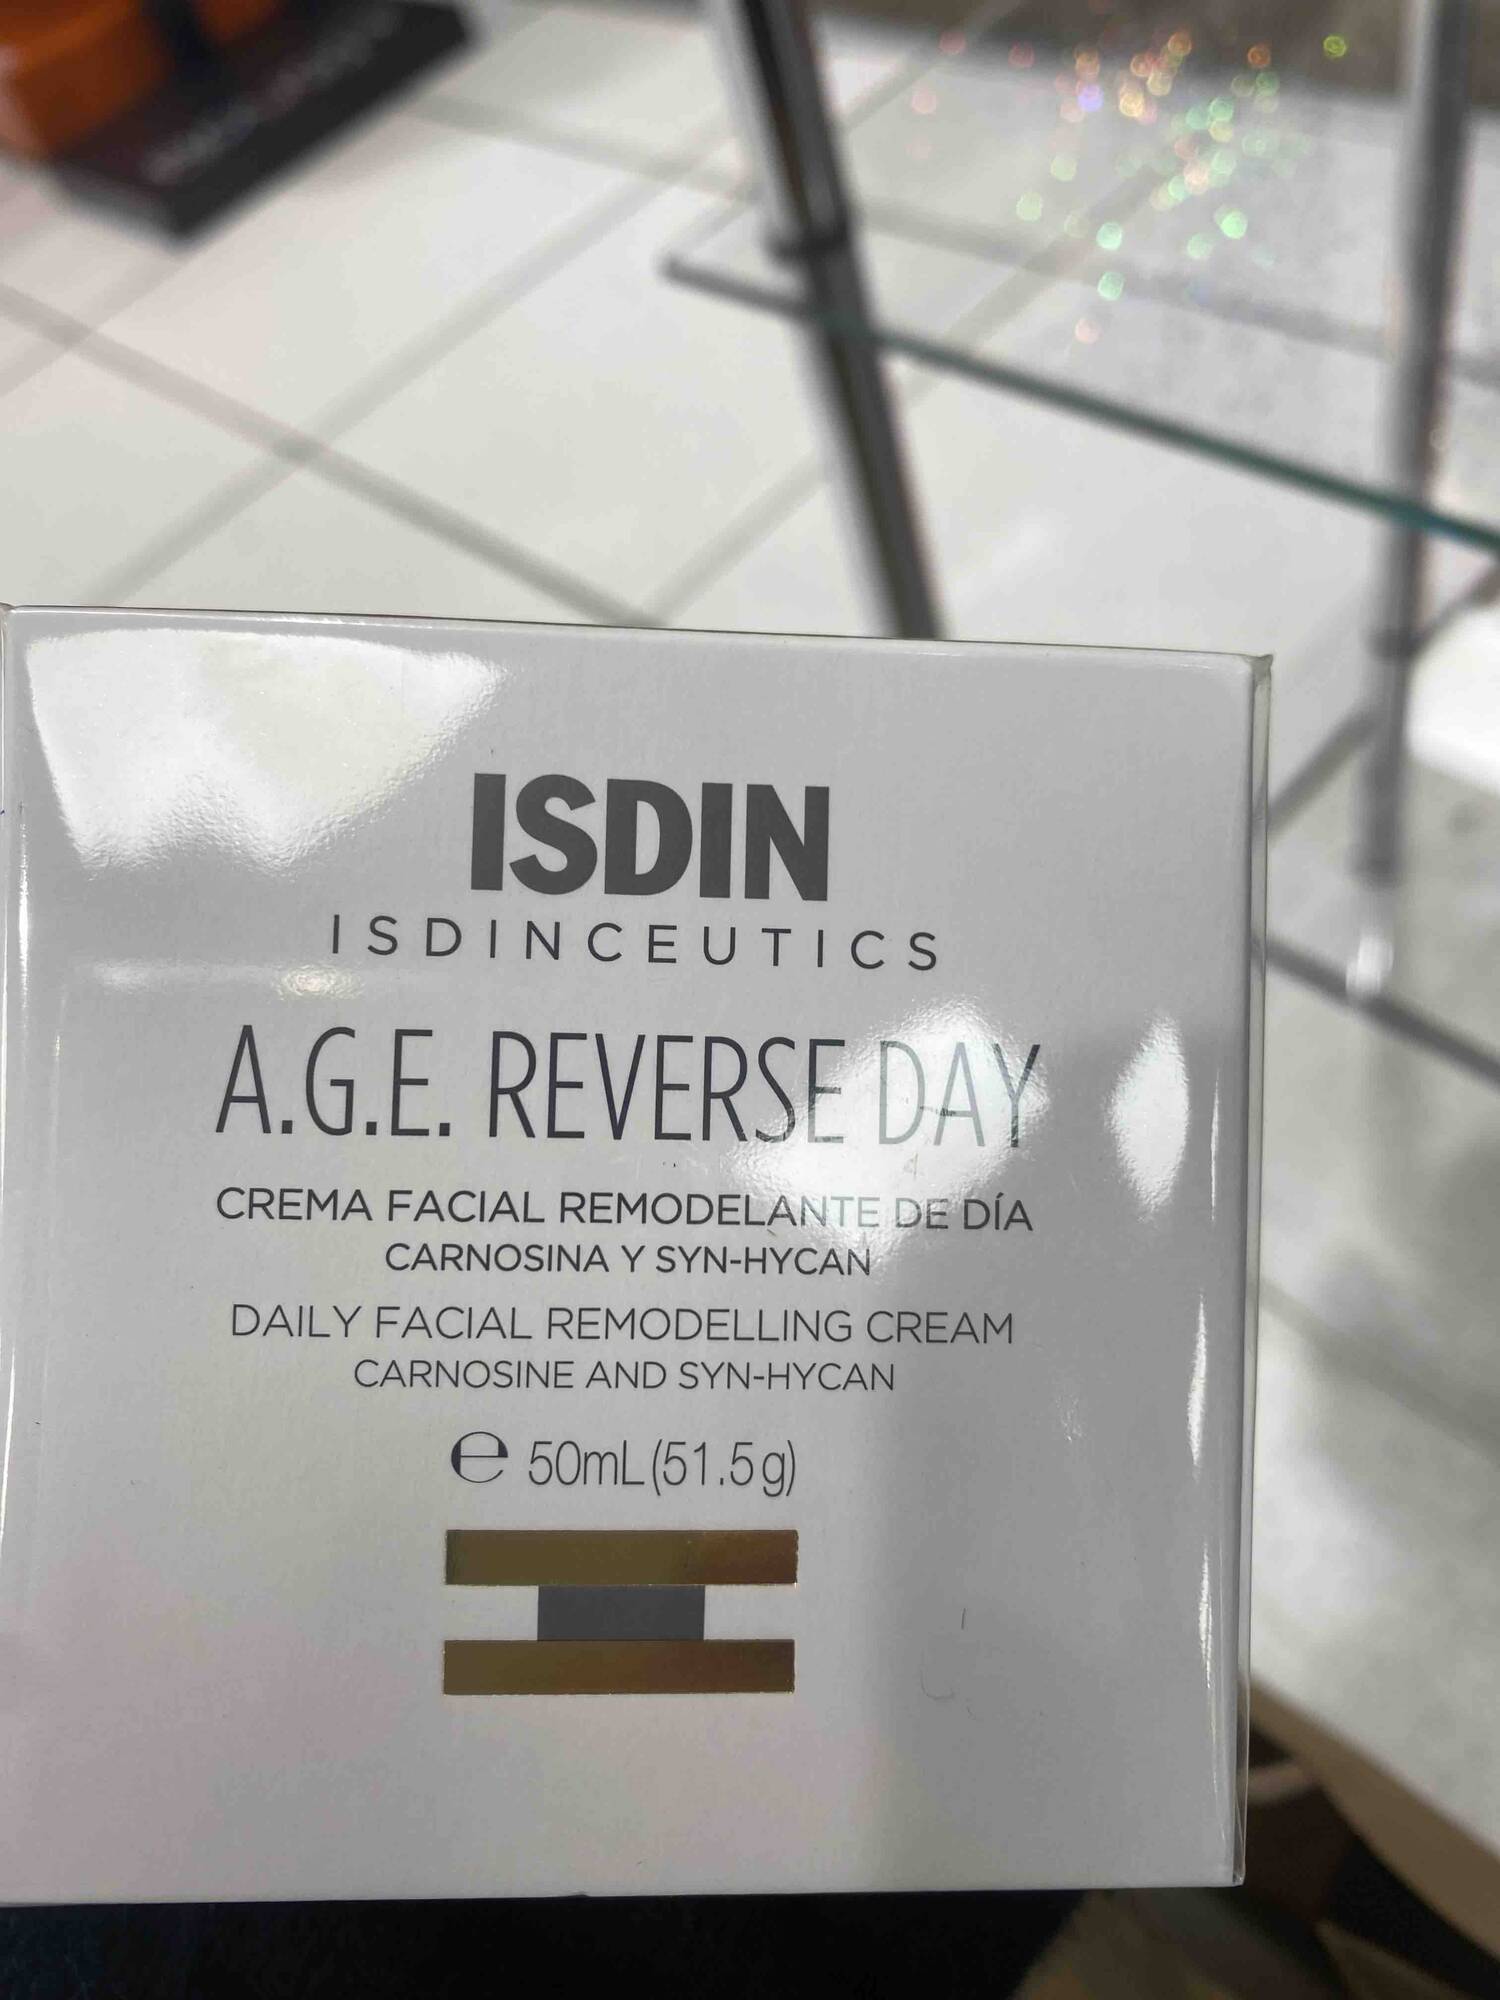 ISDIN - Isdinceutics A.G.E. Reverse day - Daily facial remodelling cream